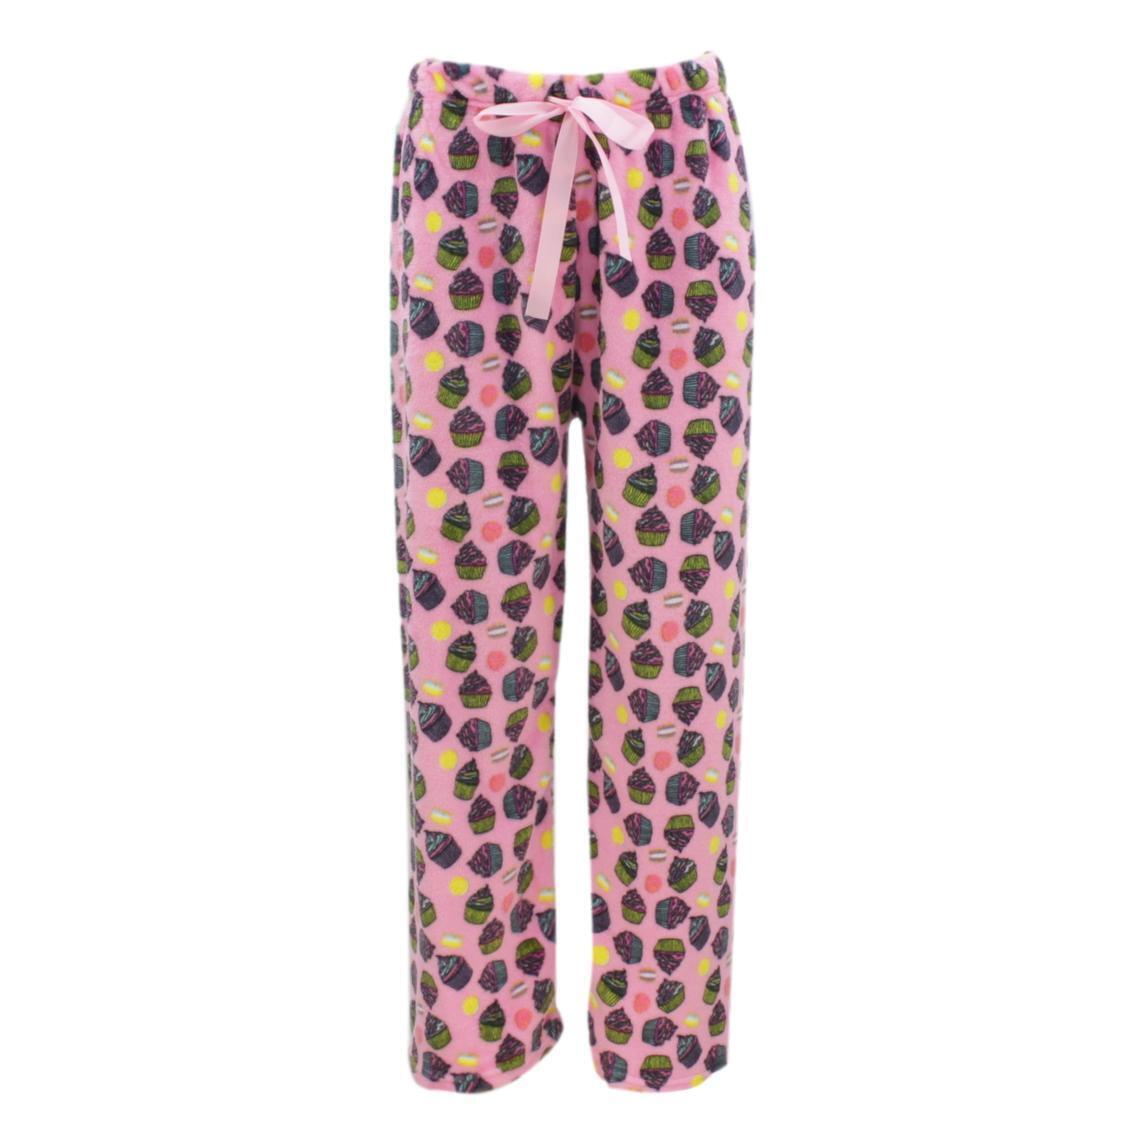 kal Womens Winter Plush Fluffy Pajama Pants Warm Fleece Lounge Pants Sleepwear  Bottoms Free Size (Waist 28-34 Pack of 1)